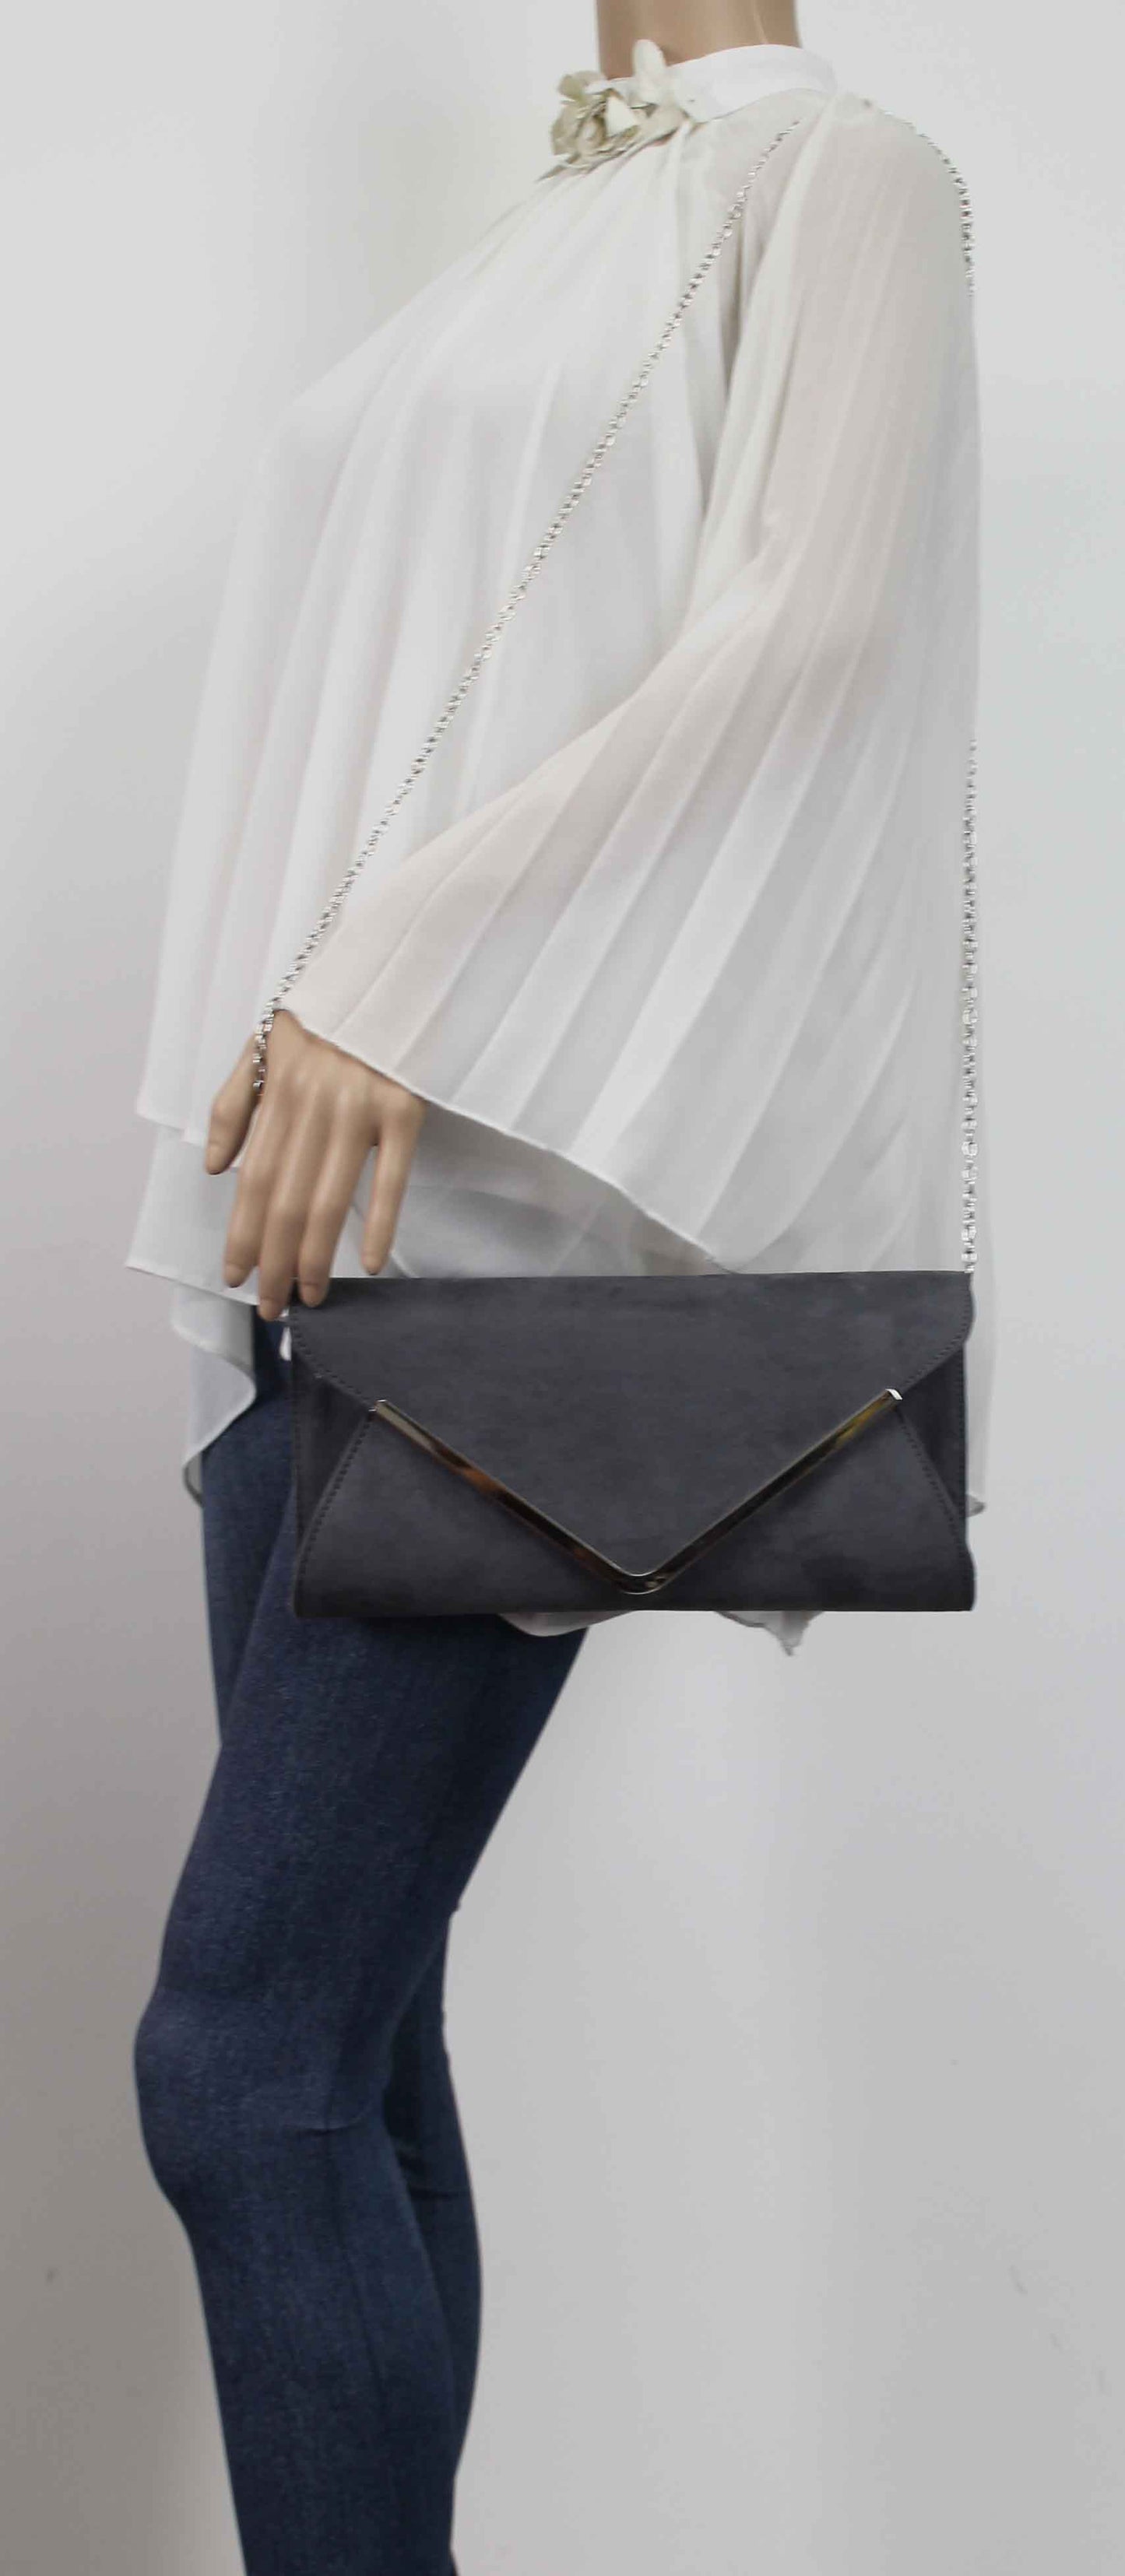 SWANKYSWANS Karlie Suede Clutch Bag Charcoal Cute Cheap Clutch Bag For Weddings School and Work